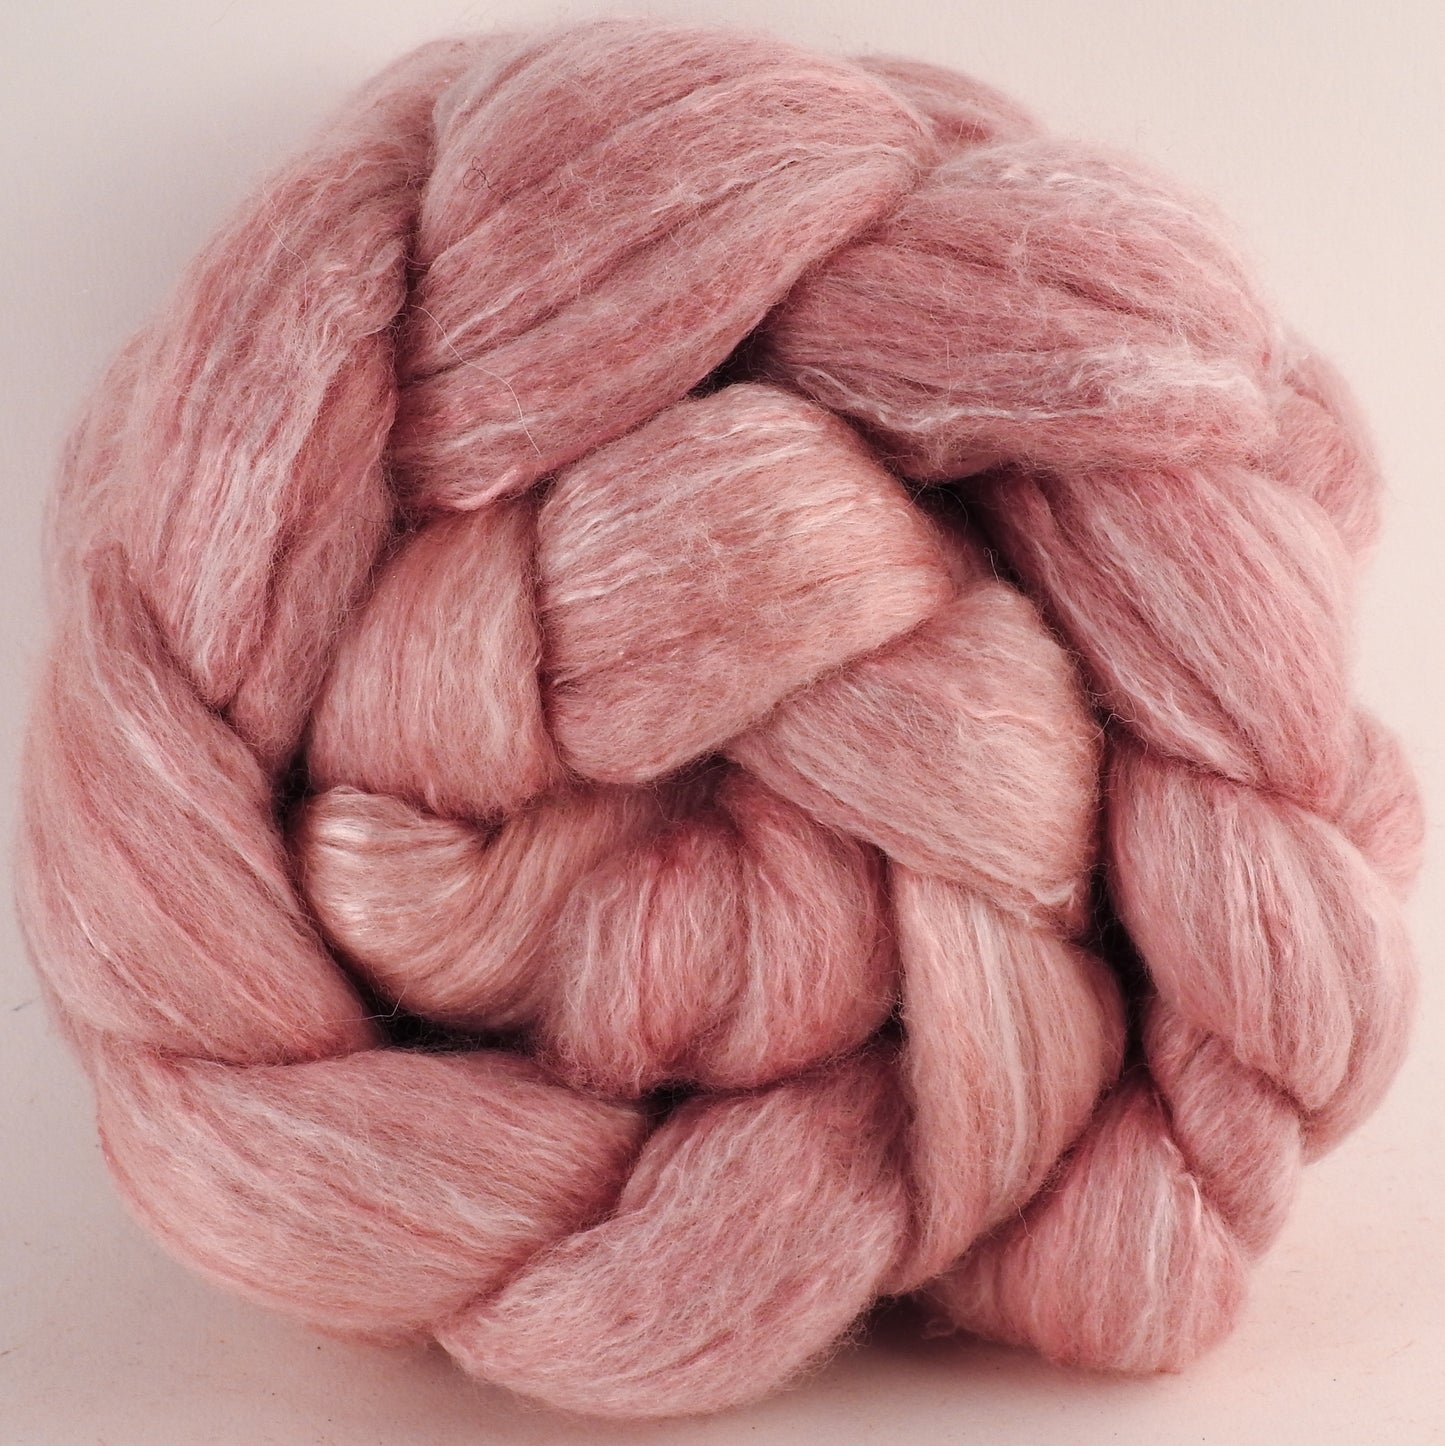 Batt in a Braid #45 - Cochineal and Brazilwood (4.4 oz.) - Corriedale/Mulberry Silk/Rose Fiber (60/20/20) - Inglenook Fibers